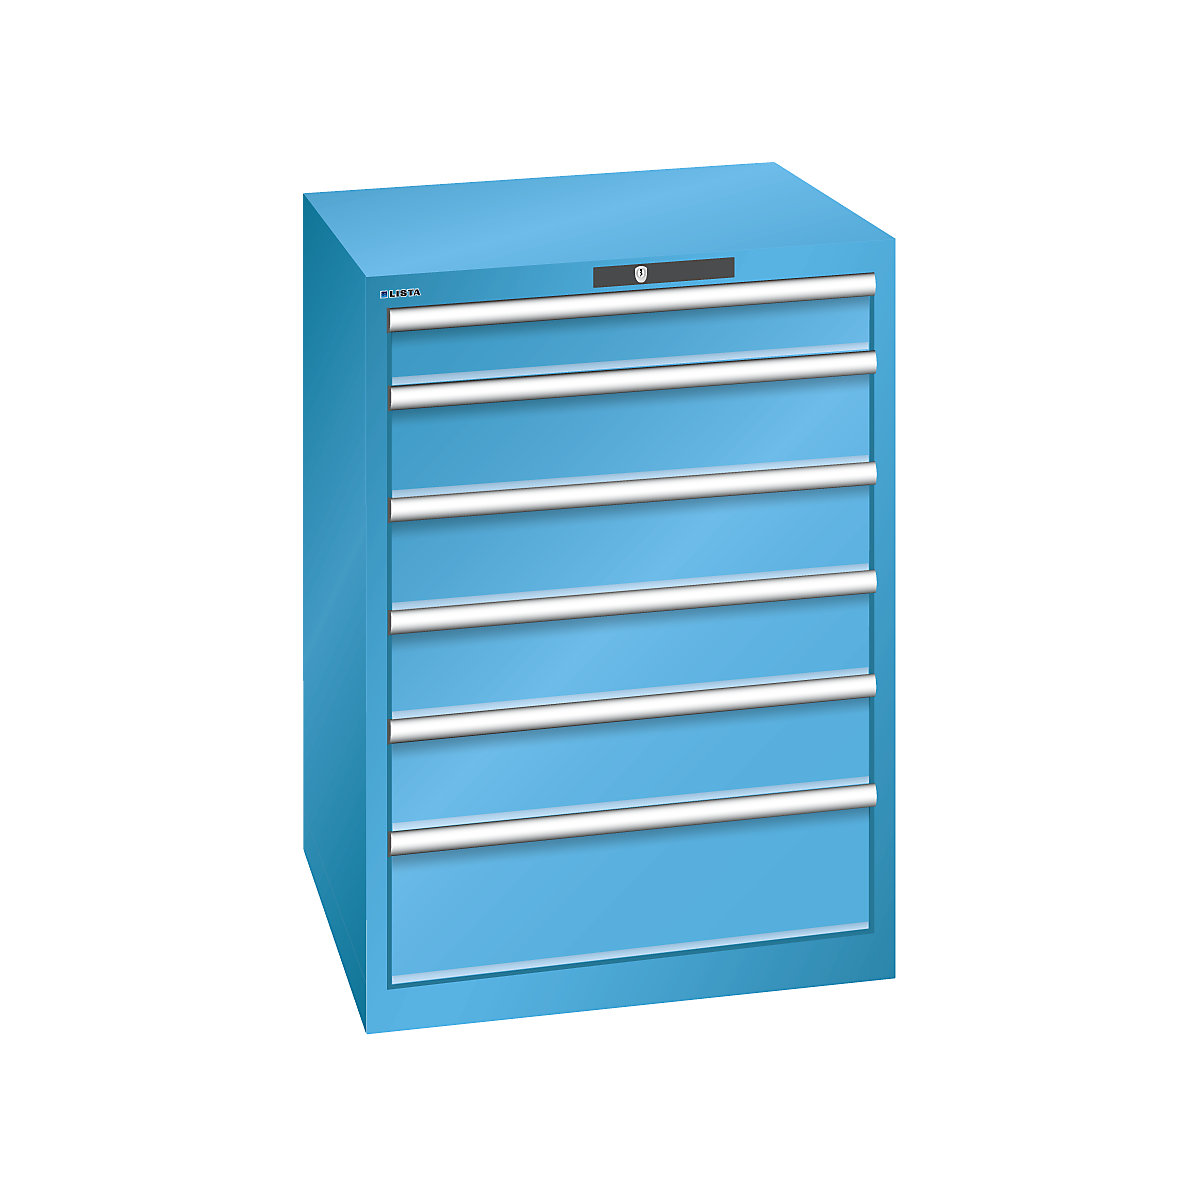 Drawer cupboard, 6 drawers – LISTA, WxDxH 717 x 725 x 1000 mm, light blue-8